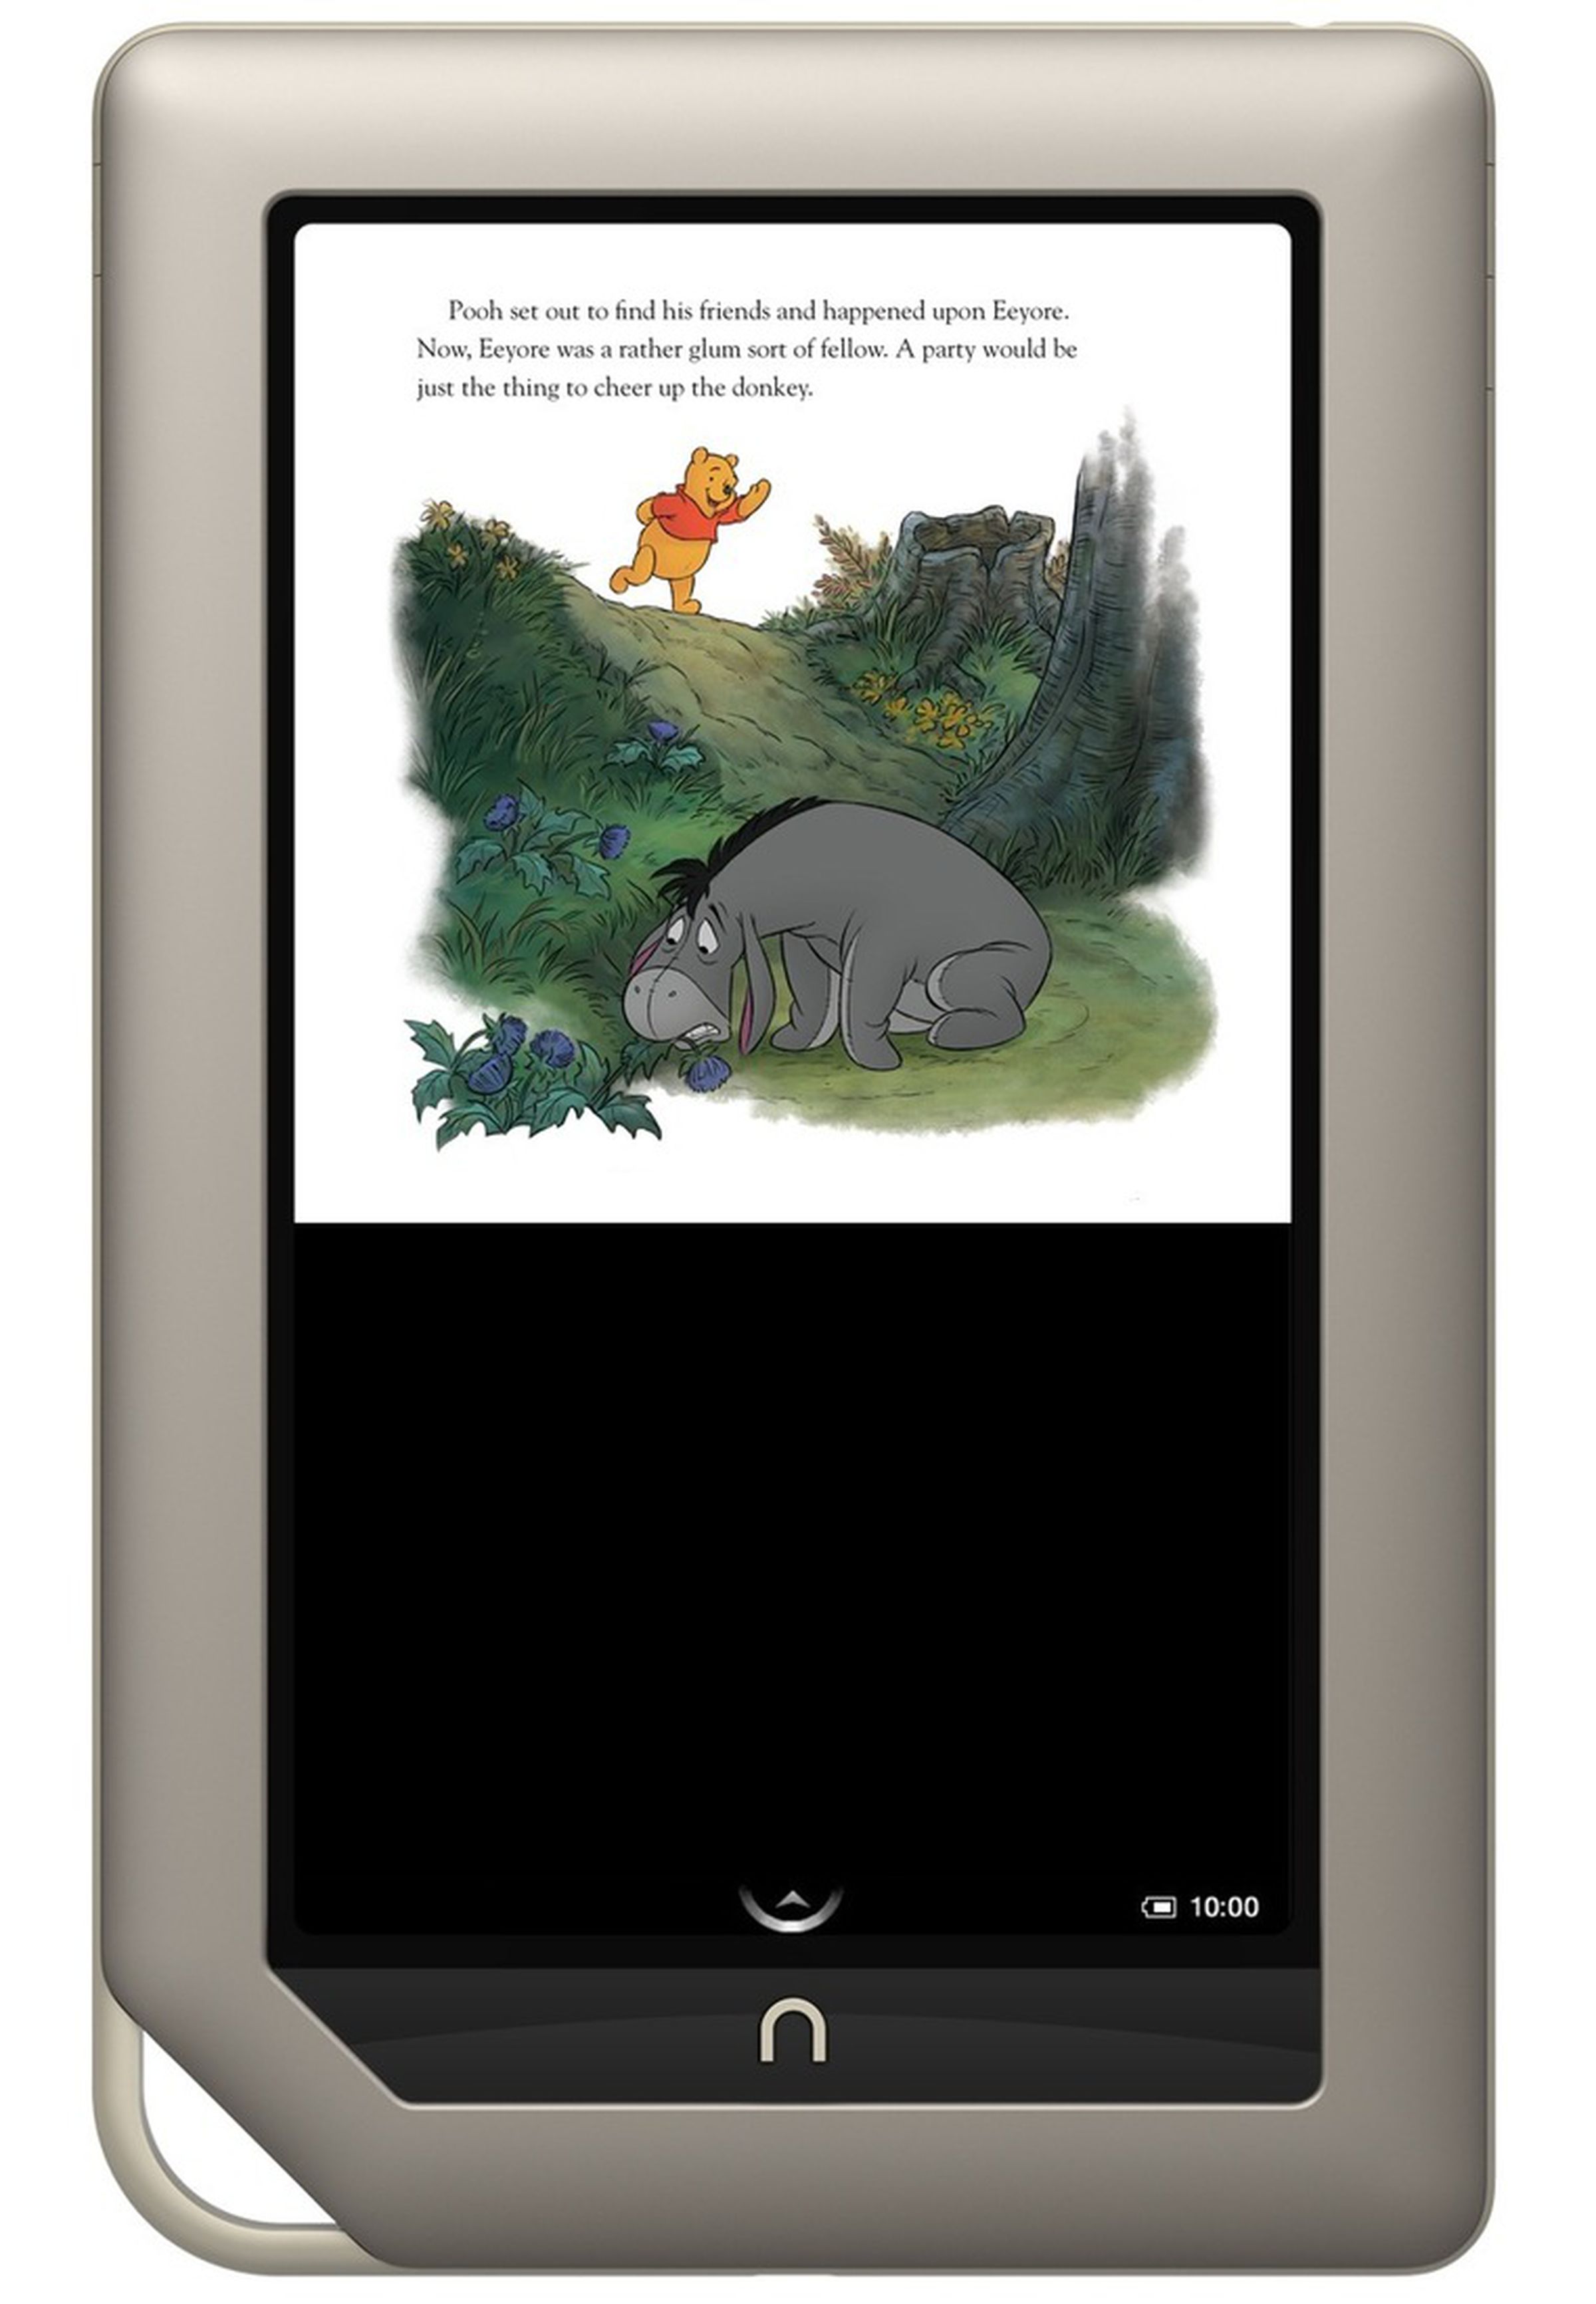 Barnes & Noble Nook Tablet press images